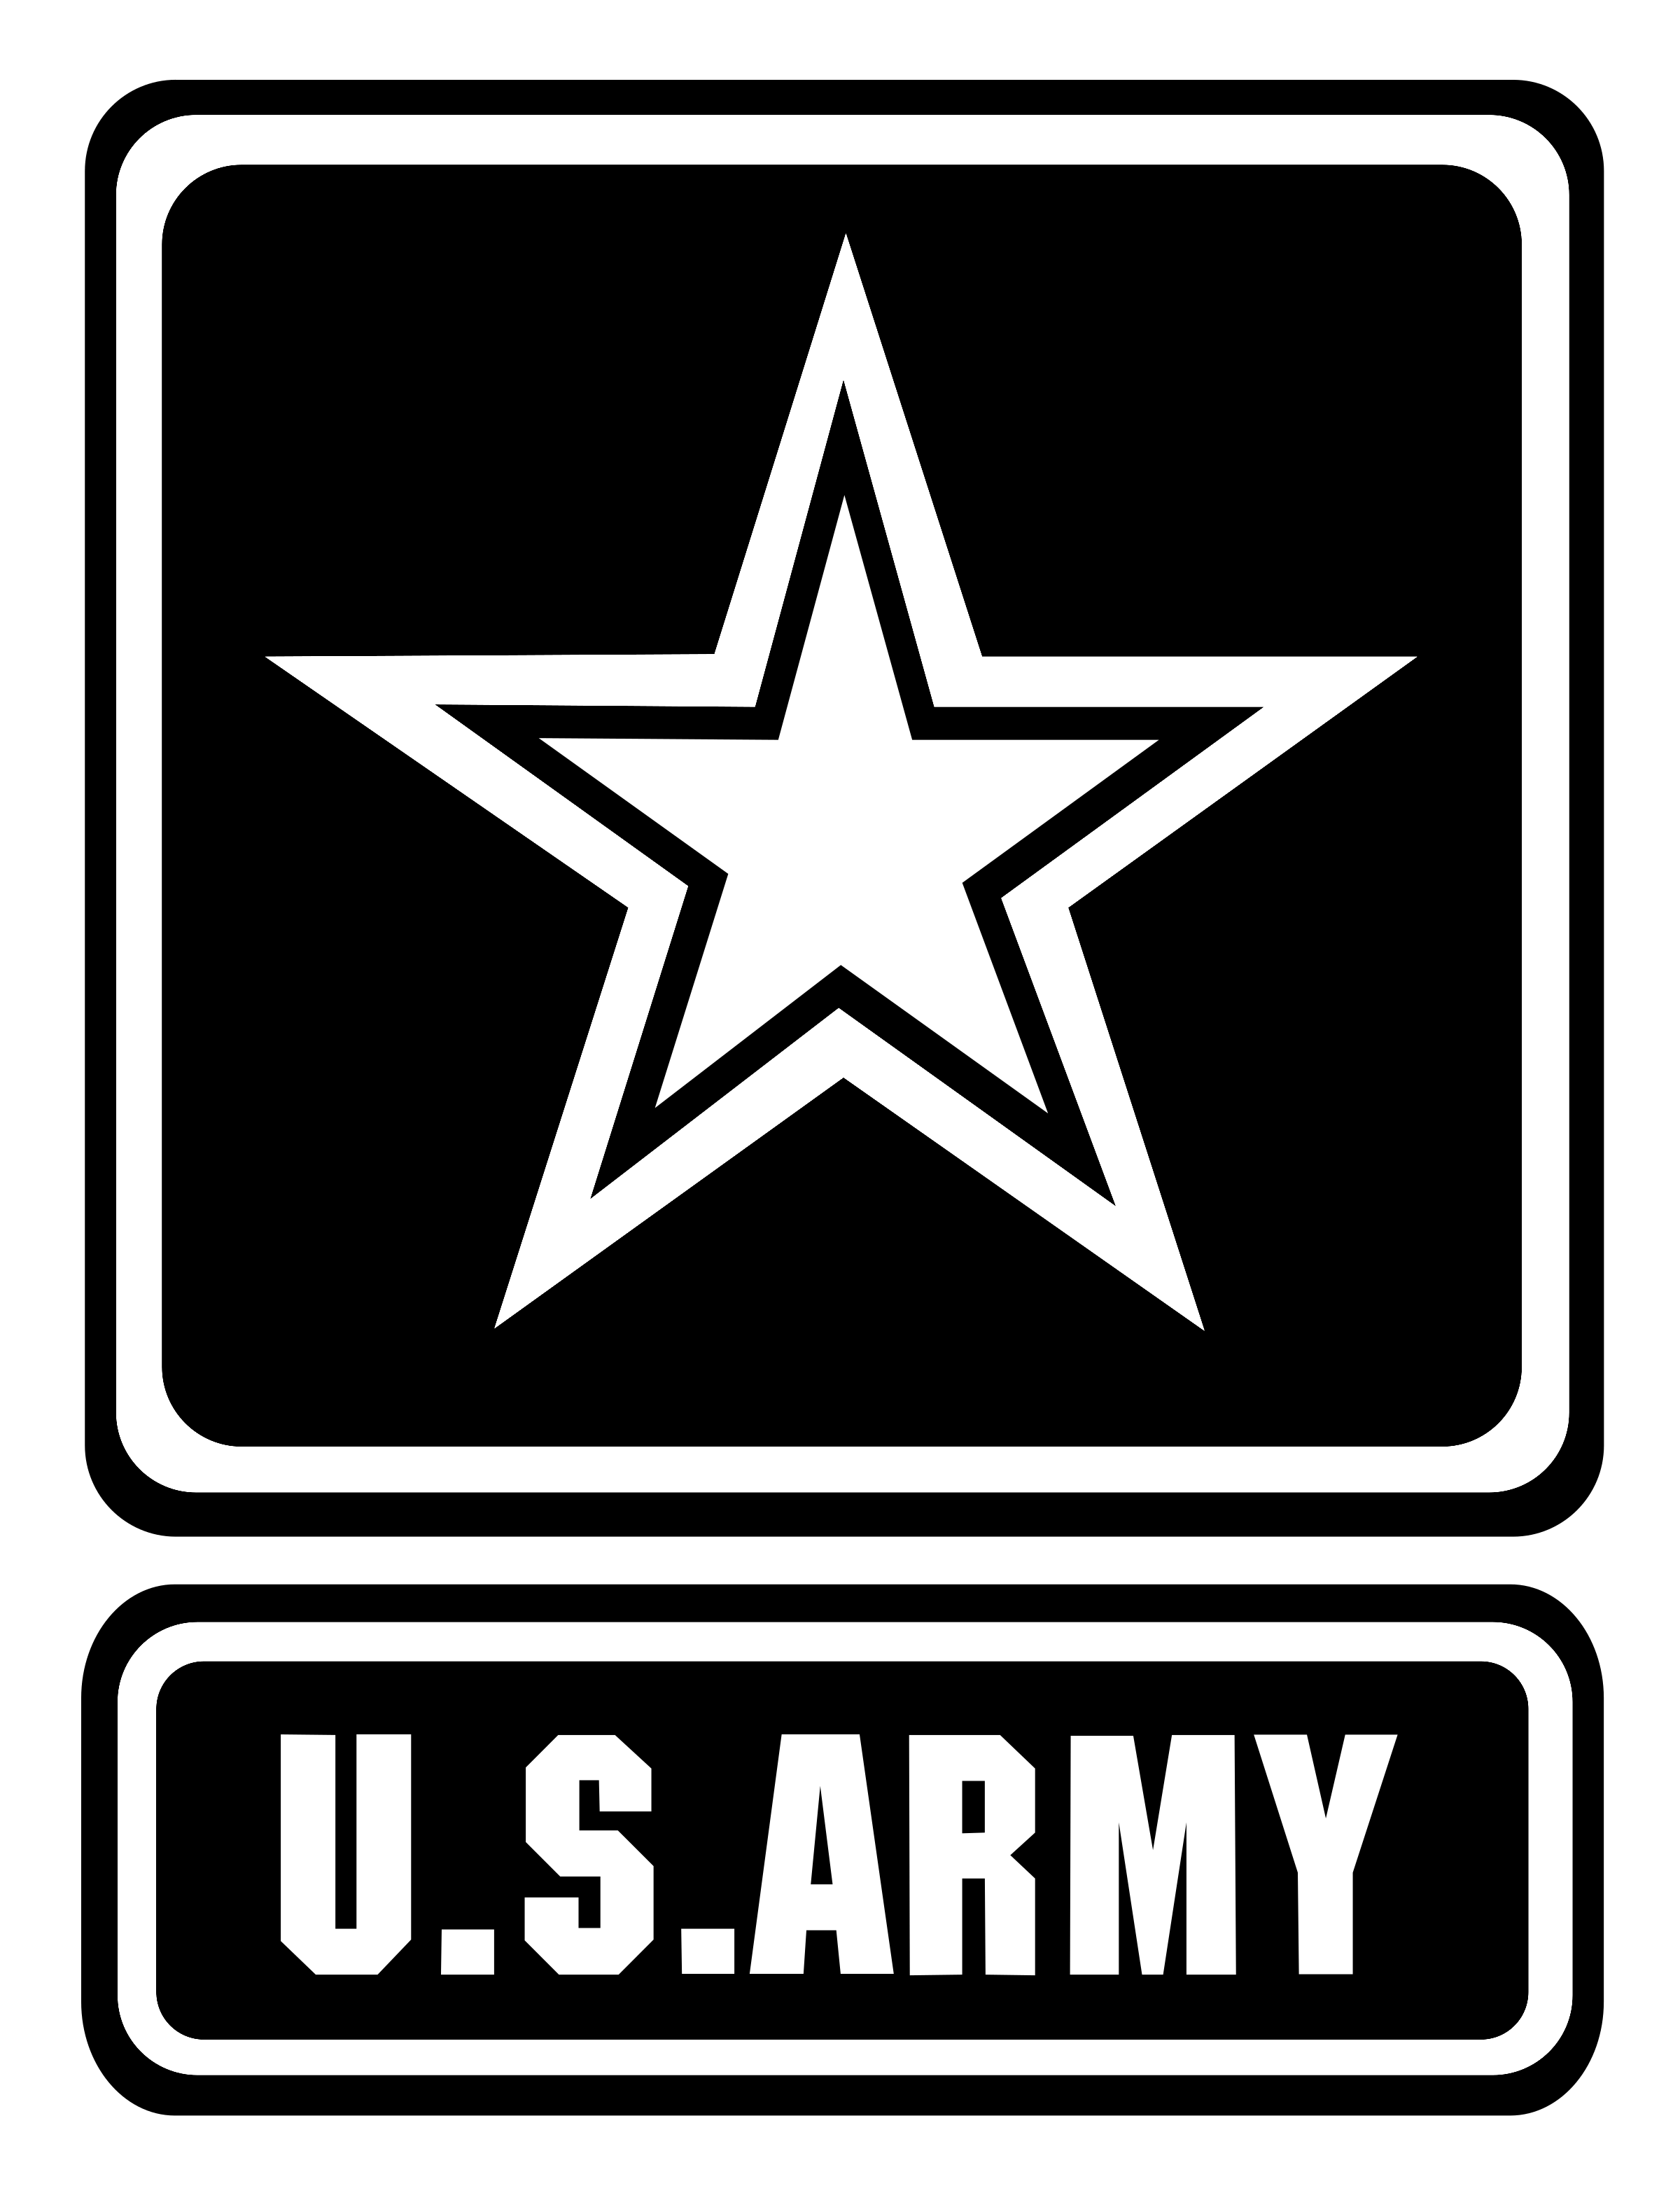 U.S. Army Logo - U.S. Army Logo PNG Transparent & SVG Vector - Freebie Supply